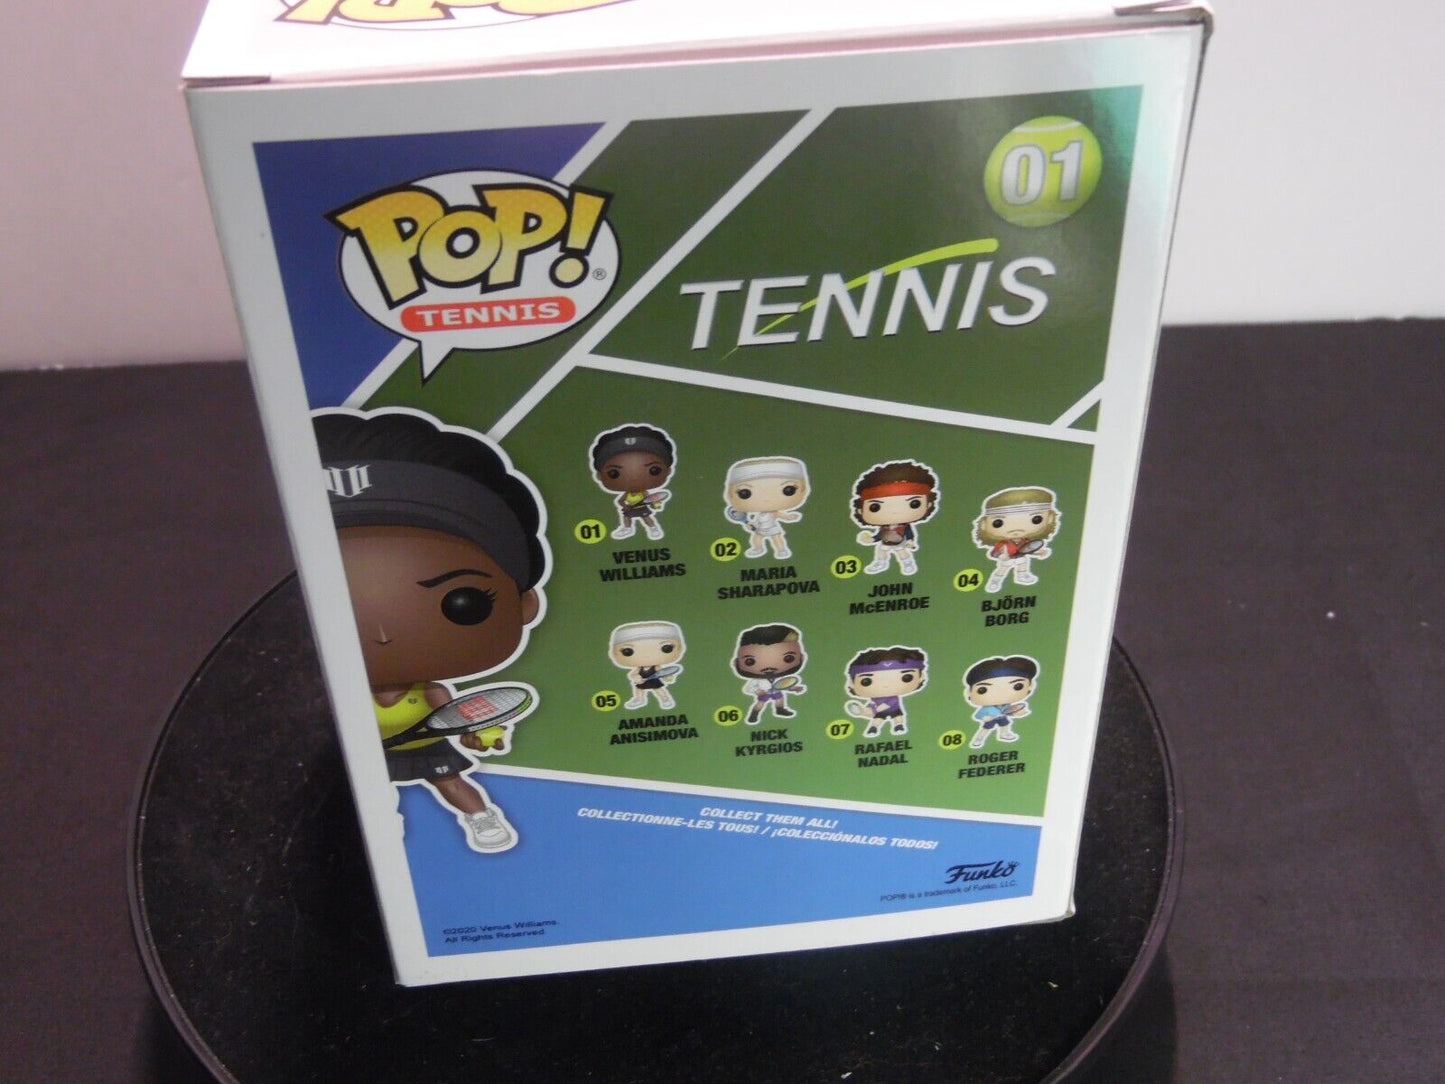 Funko Pop! Sports Legends: Tennis, Venus Williams #01!